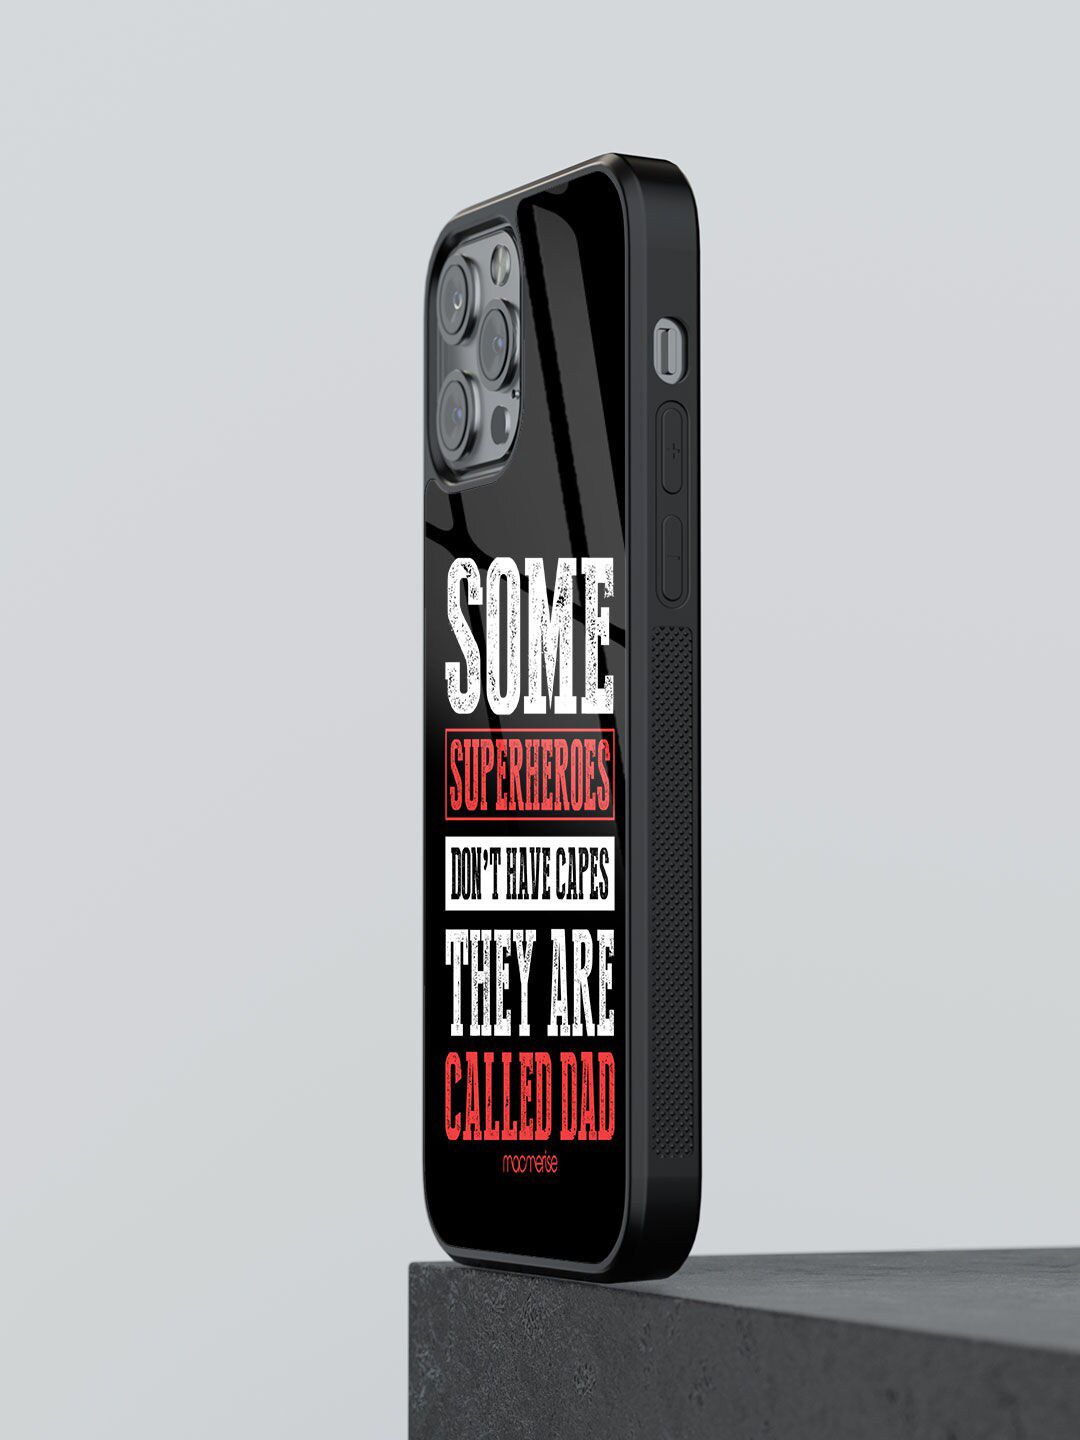 macmerise Black & White Printed iPhone 12 Pro Max Glass Phone Back Case Price in India